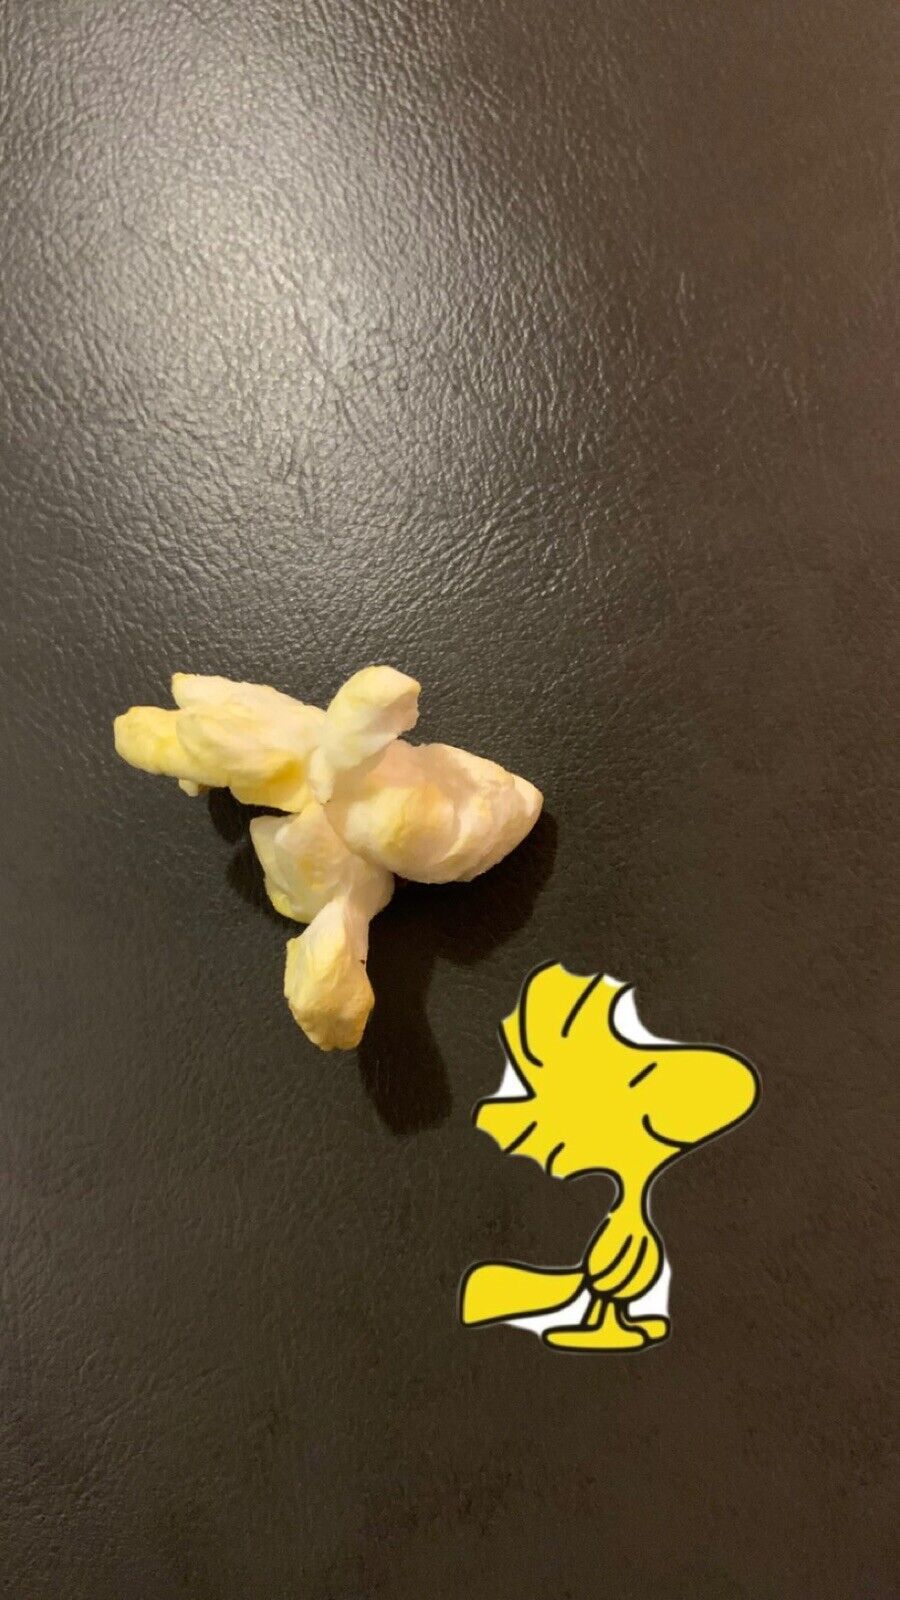 peanuts Woodstock Shaped Piece Of Popcorn